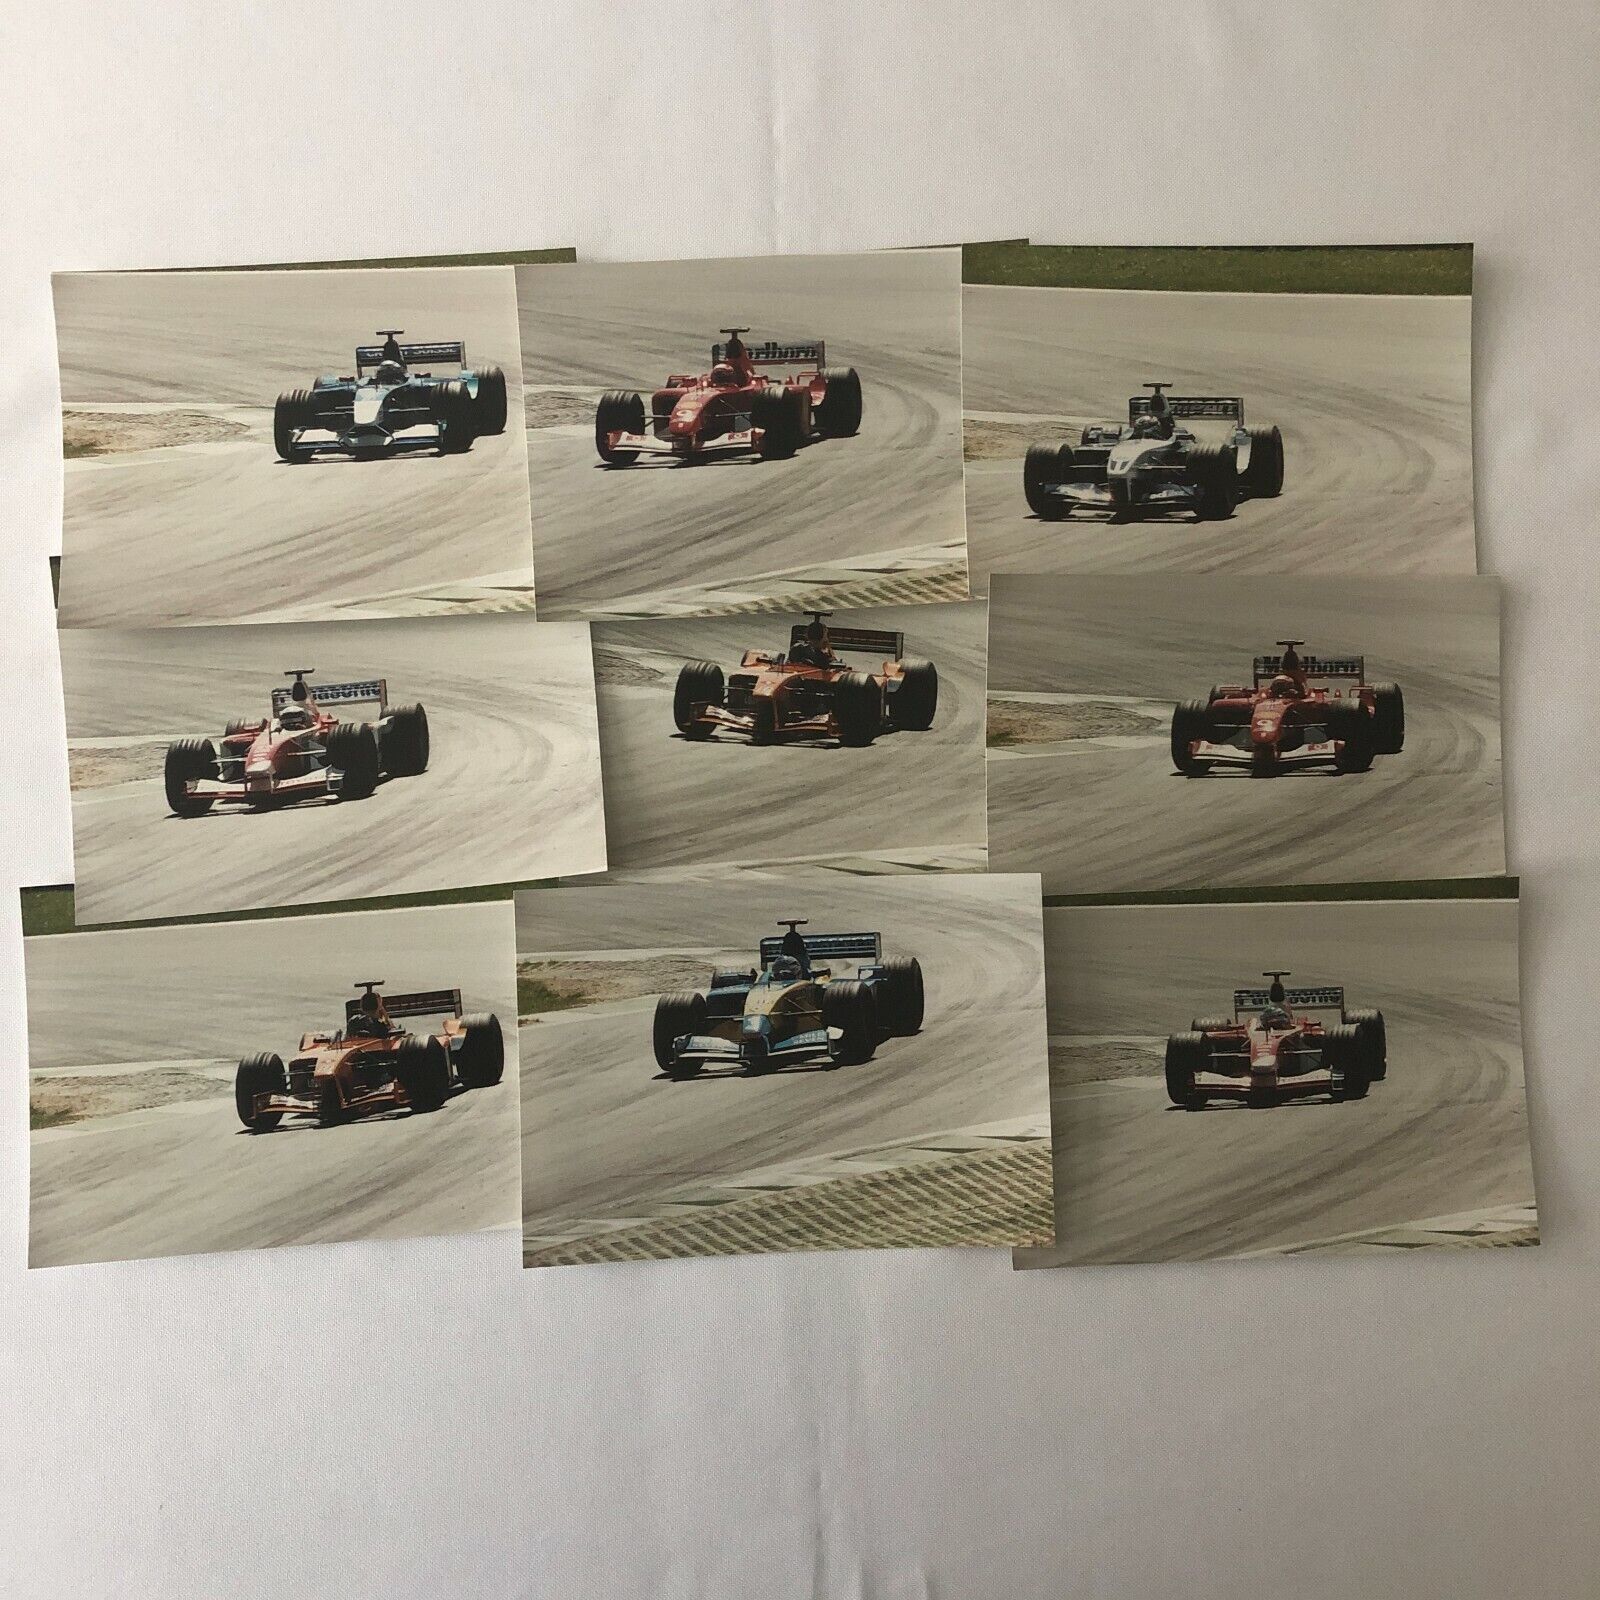 2002 Austrian Grand Prix F1 Racing Car Photo Print Lot of 9 - Ferrari + 